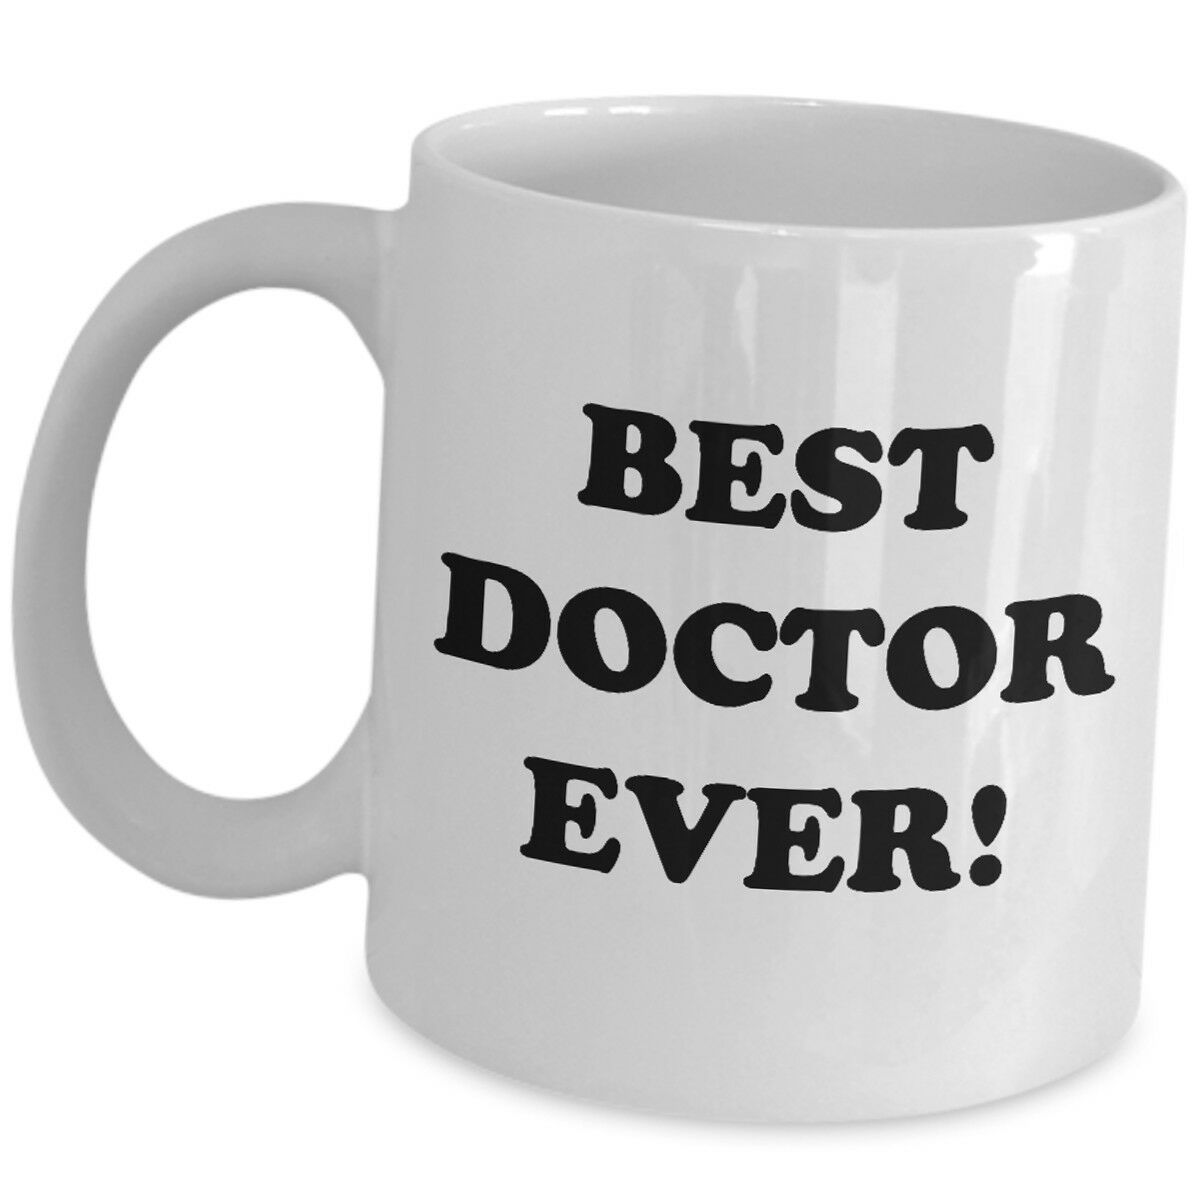 Best Doctor Ever Coffee Mug Cute Gift Idea Cup For Wo Men Girl Boy Friend MD New